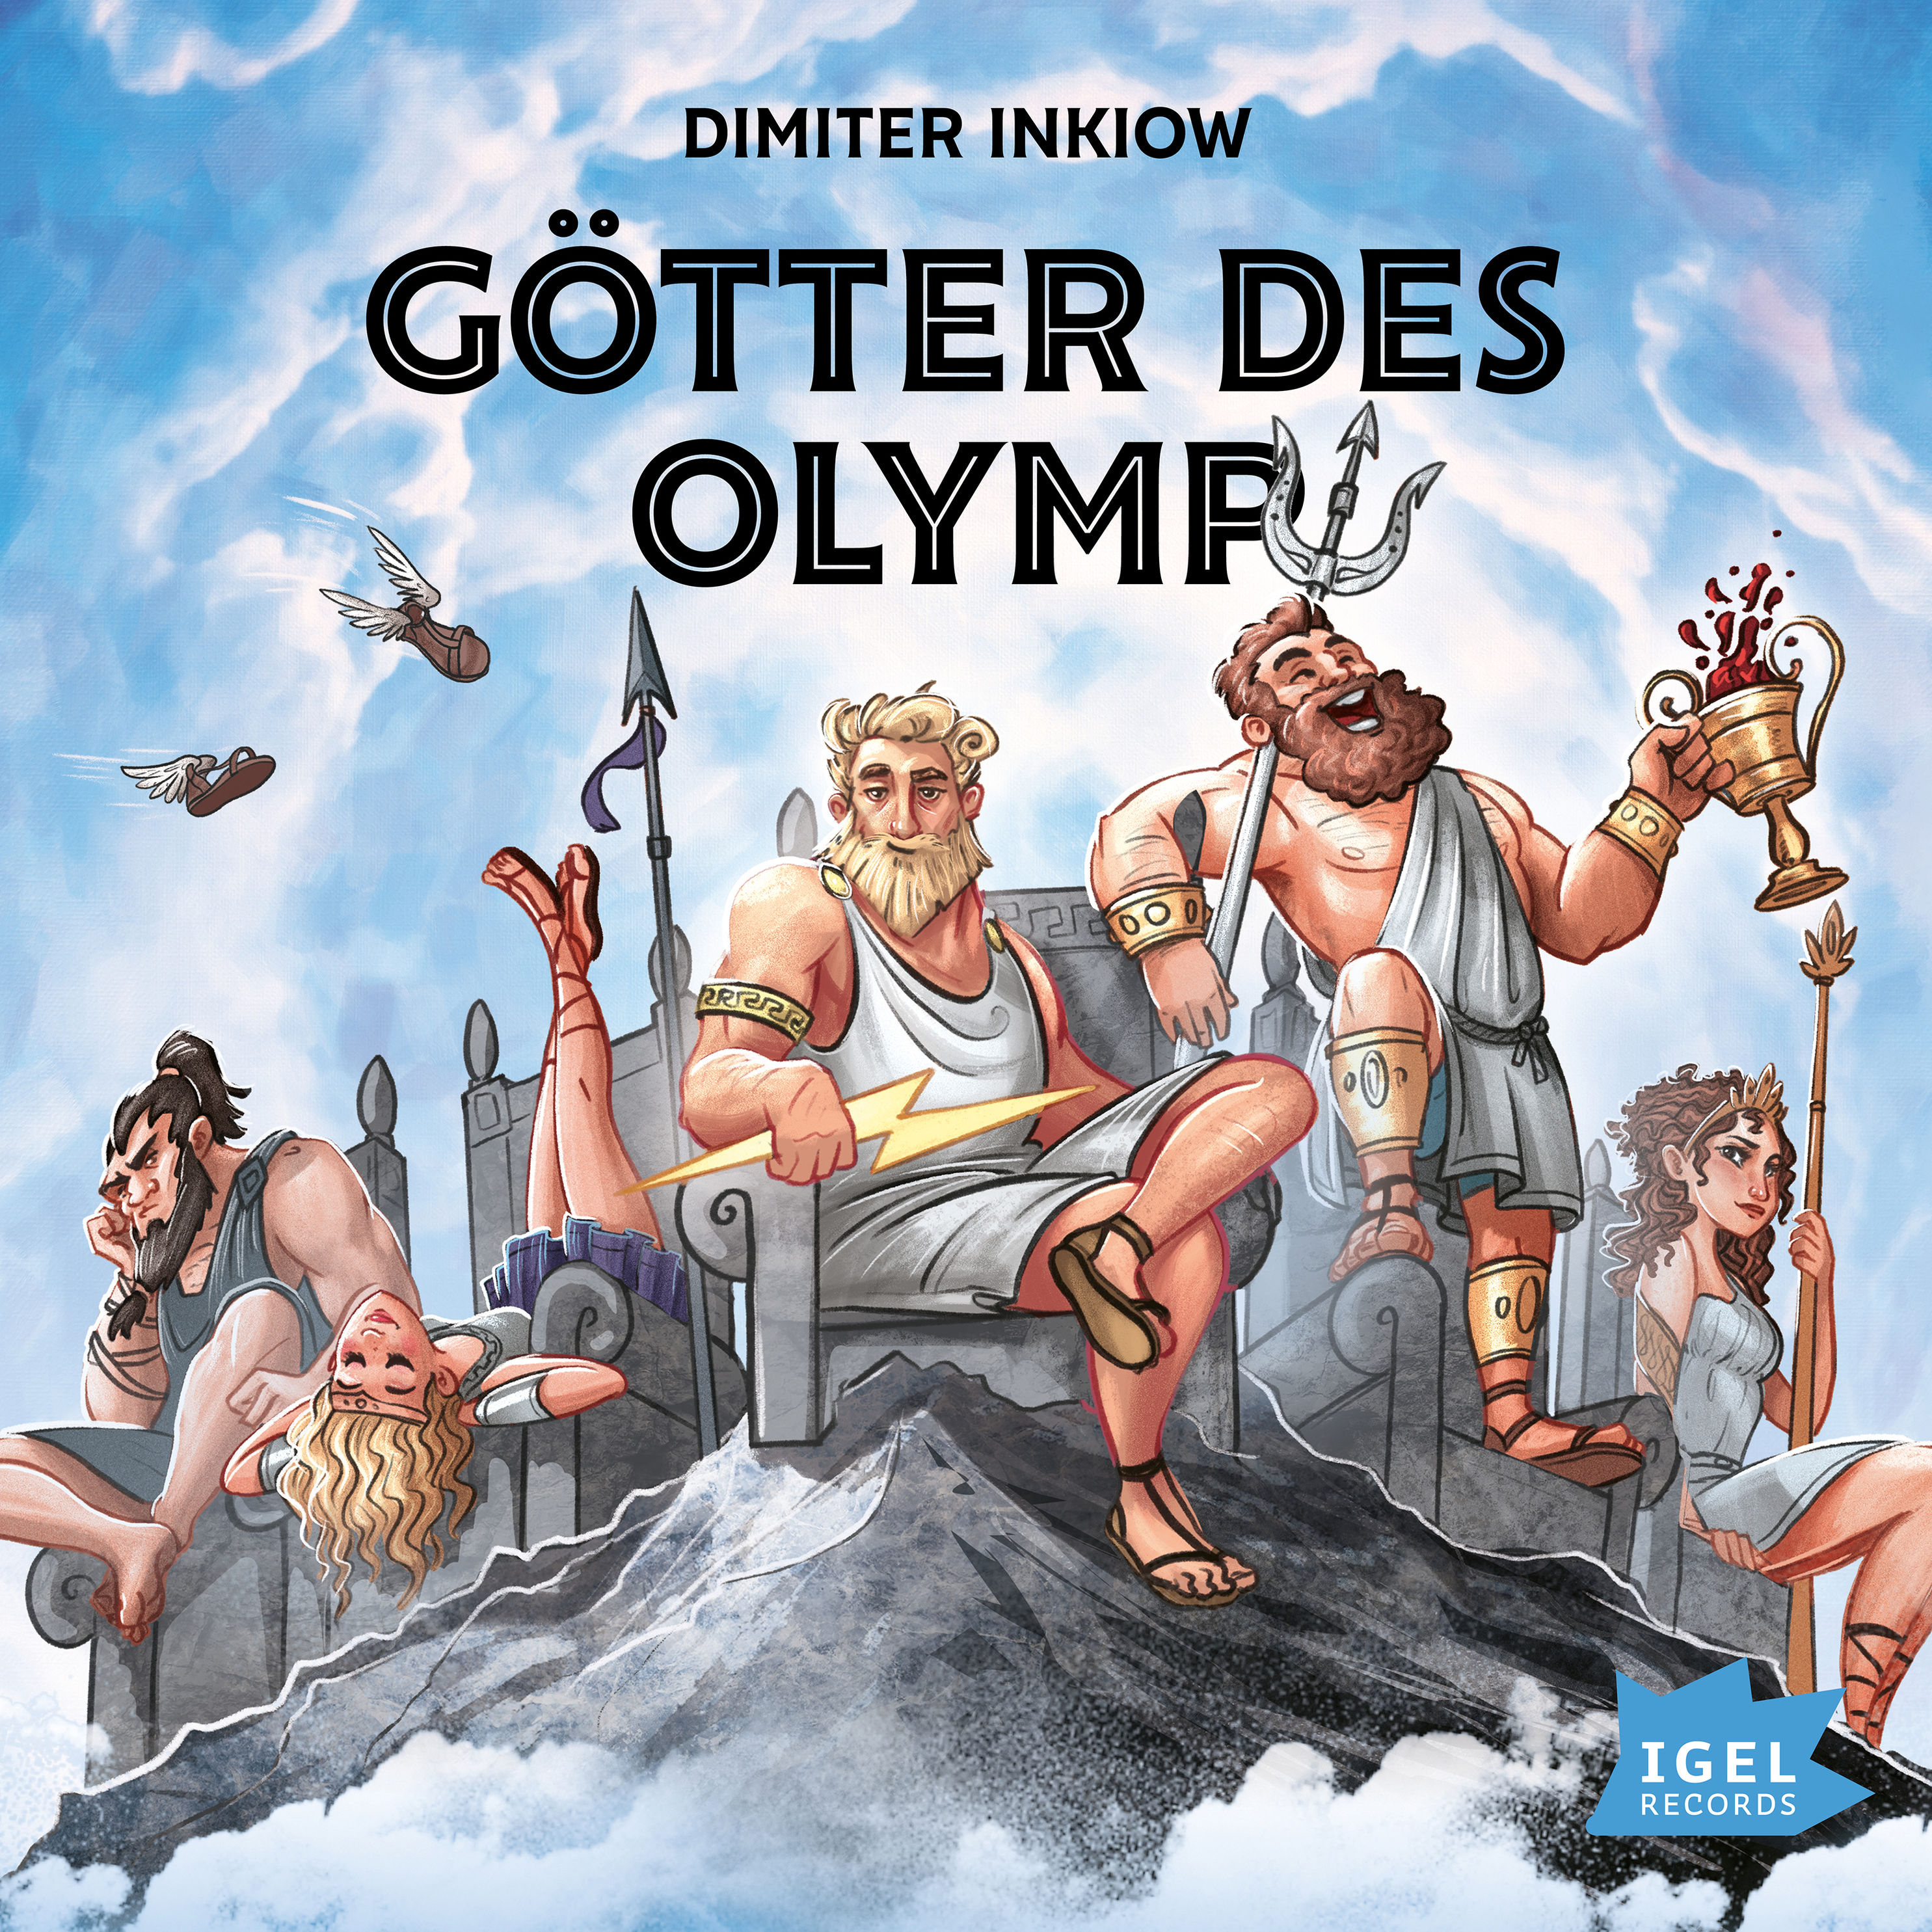 Götter des Olymp Hörbuch sicher downloaden bei Weltbild.ch